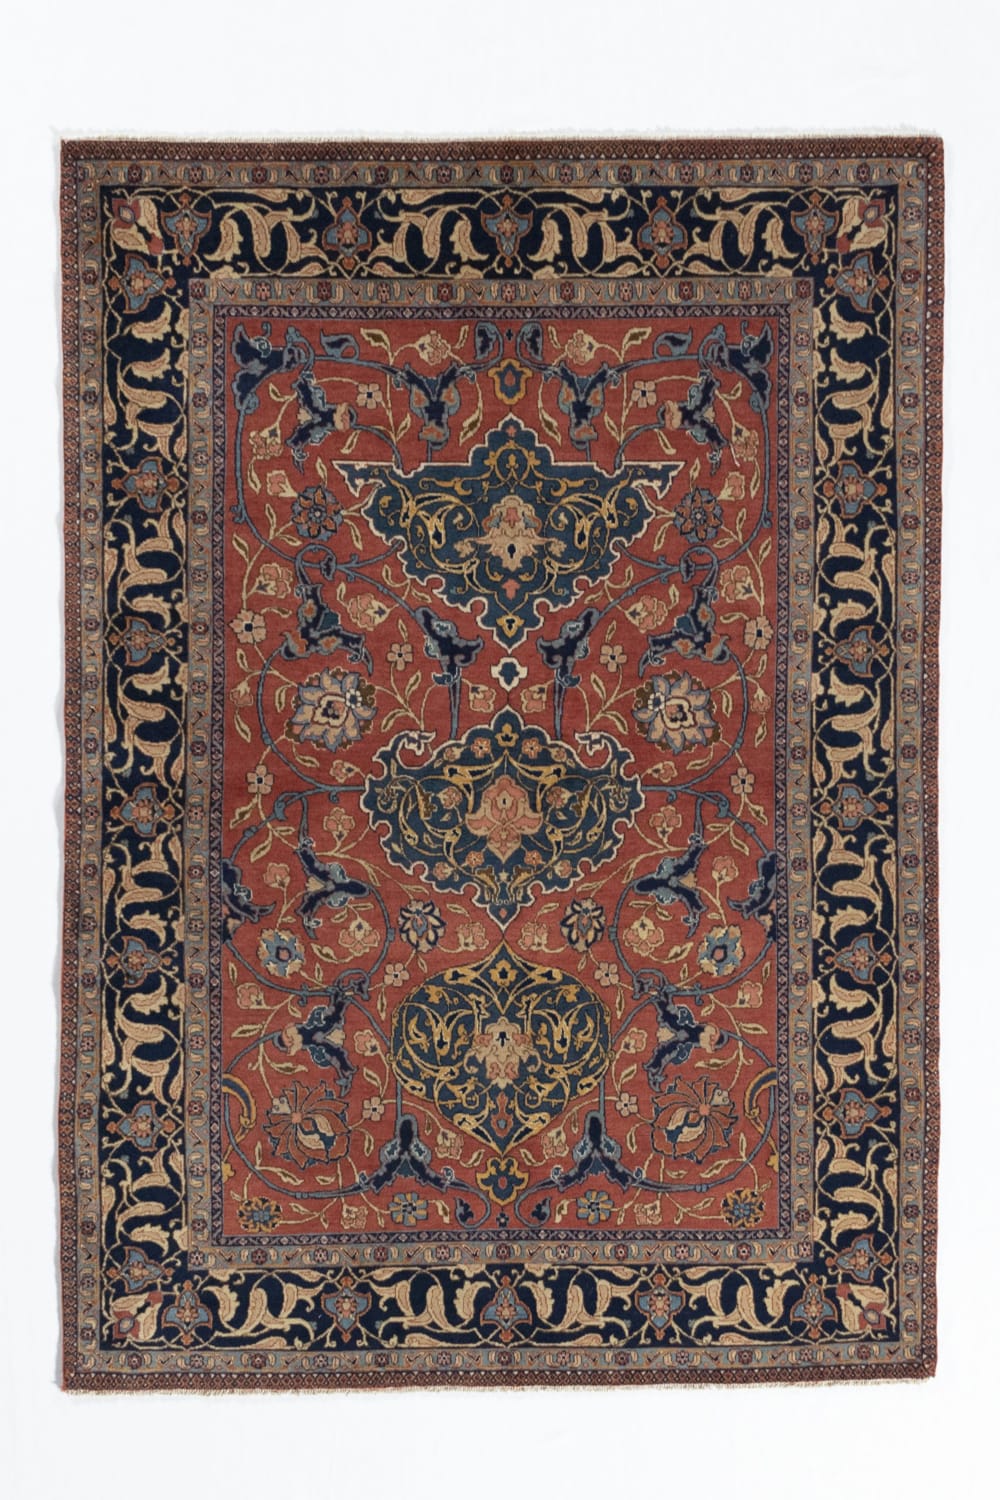 Rug# 45336, Superfine vintage Tabriz, fine wool pile, classic Safavid design, rare, circa 1960, Persia, size 193x135 cm